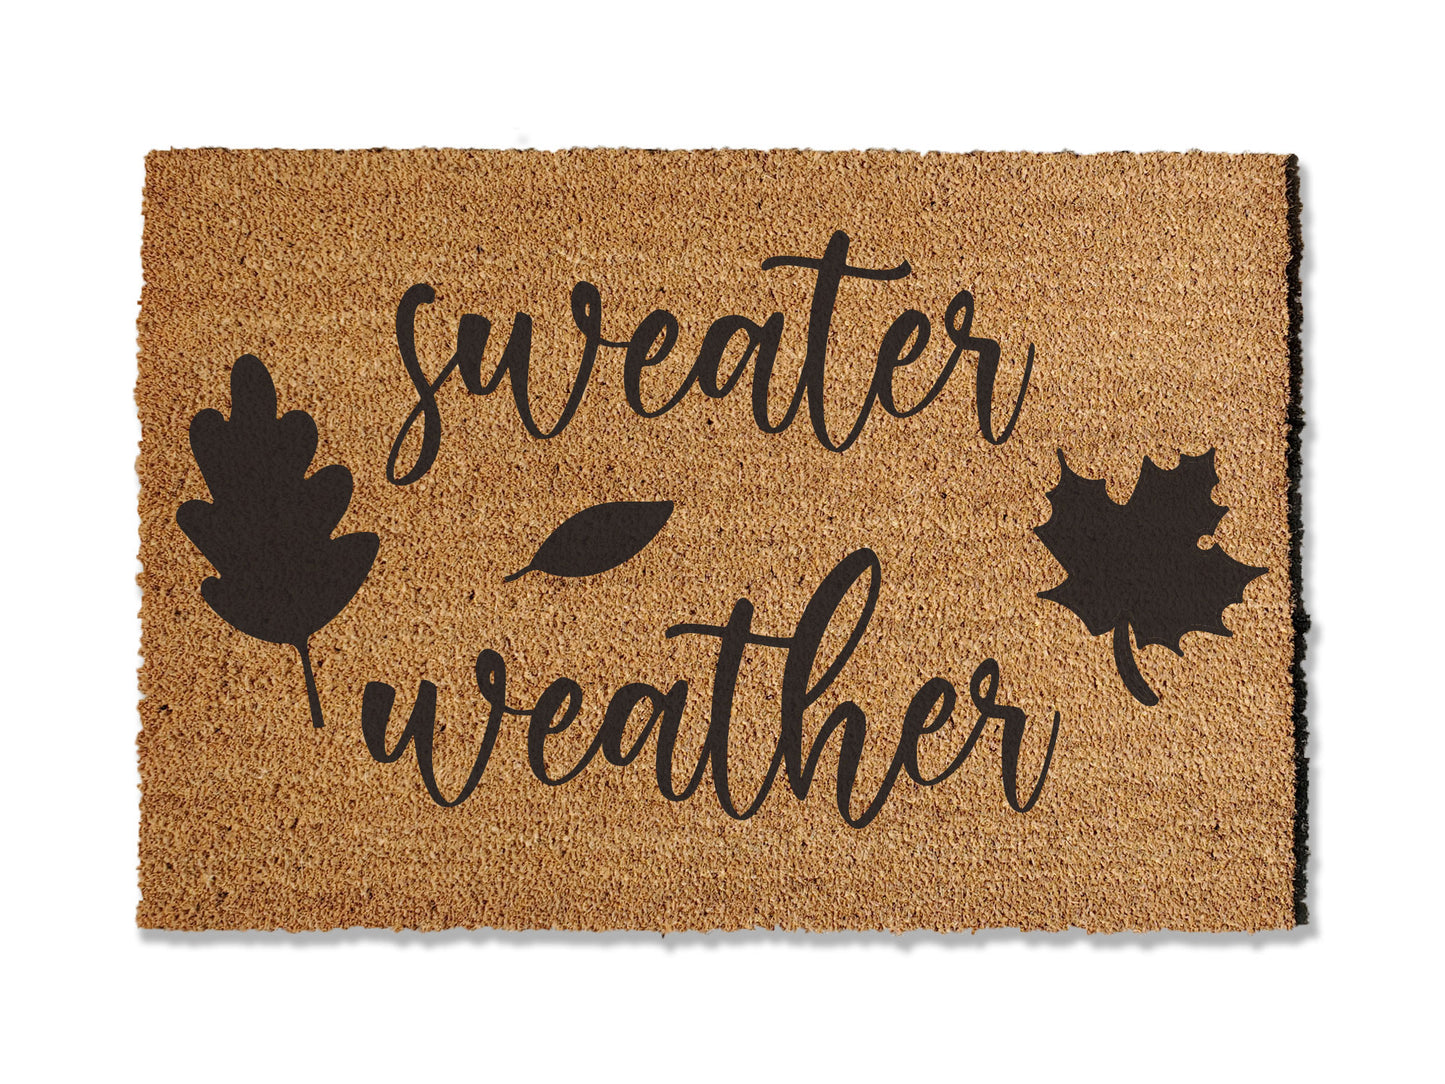 Sweater Weather Doormat - Fall Decor